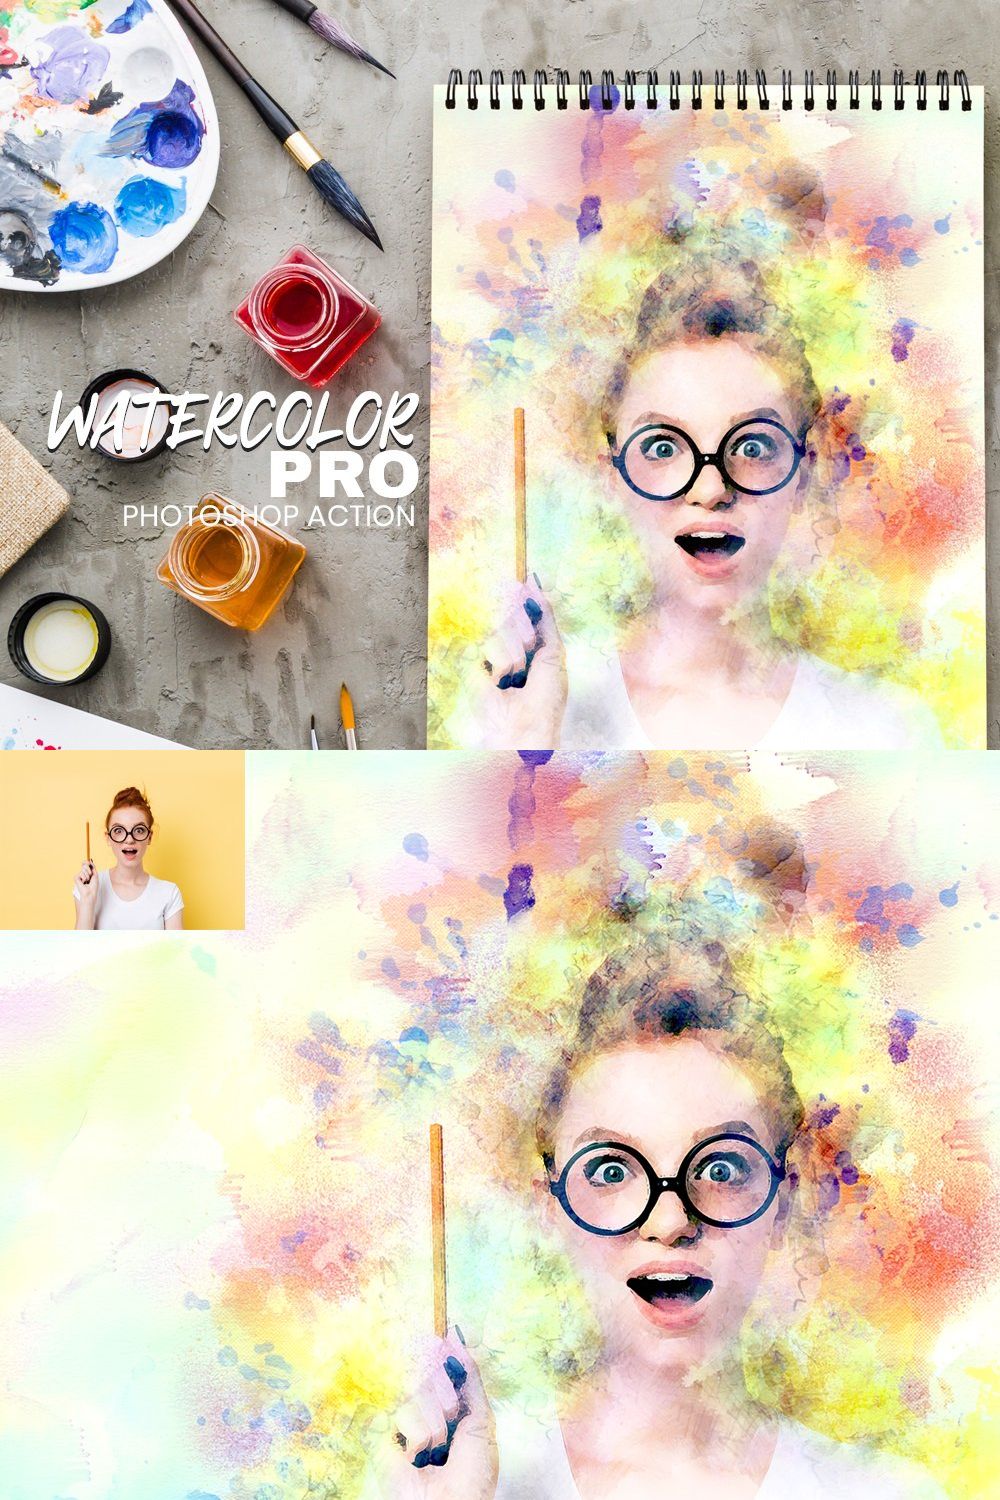 Watercolor Pro Photoshop Action pinterest preview image.